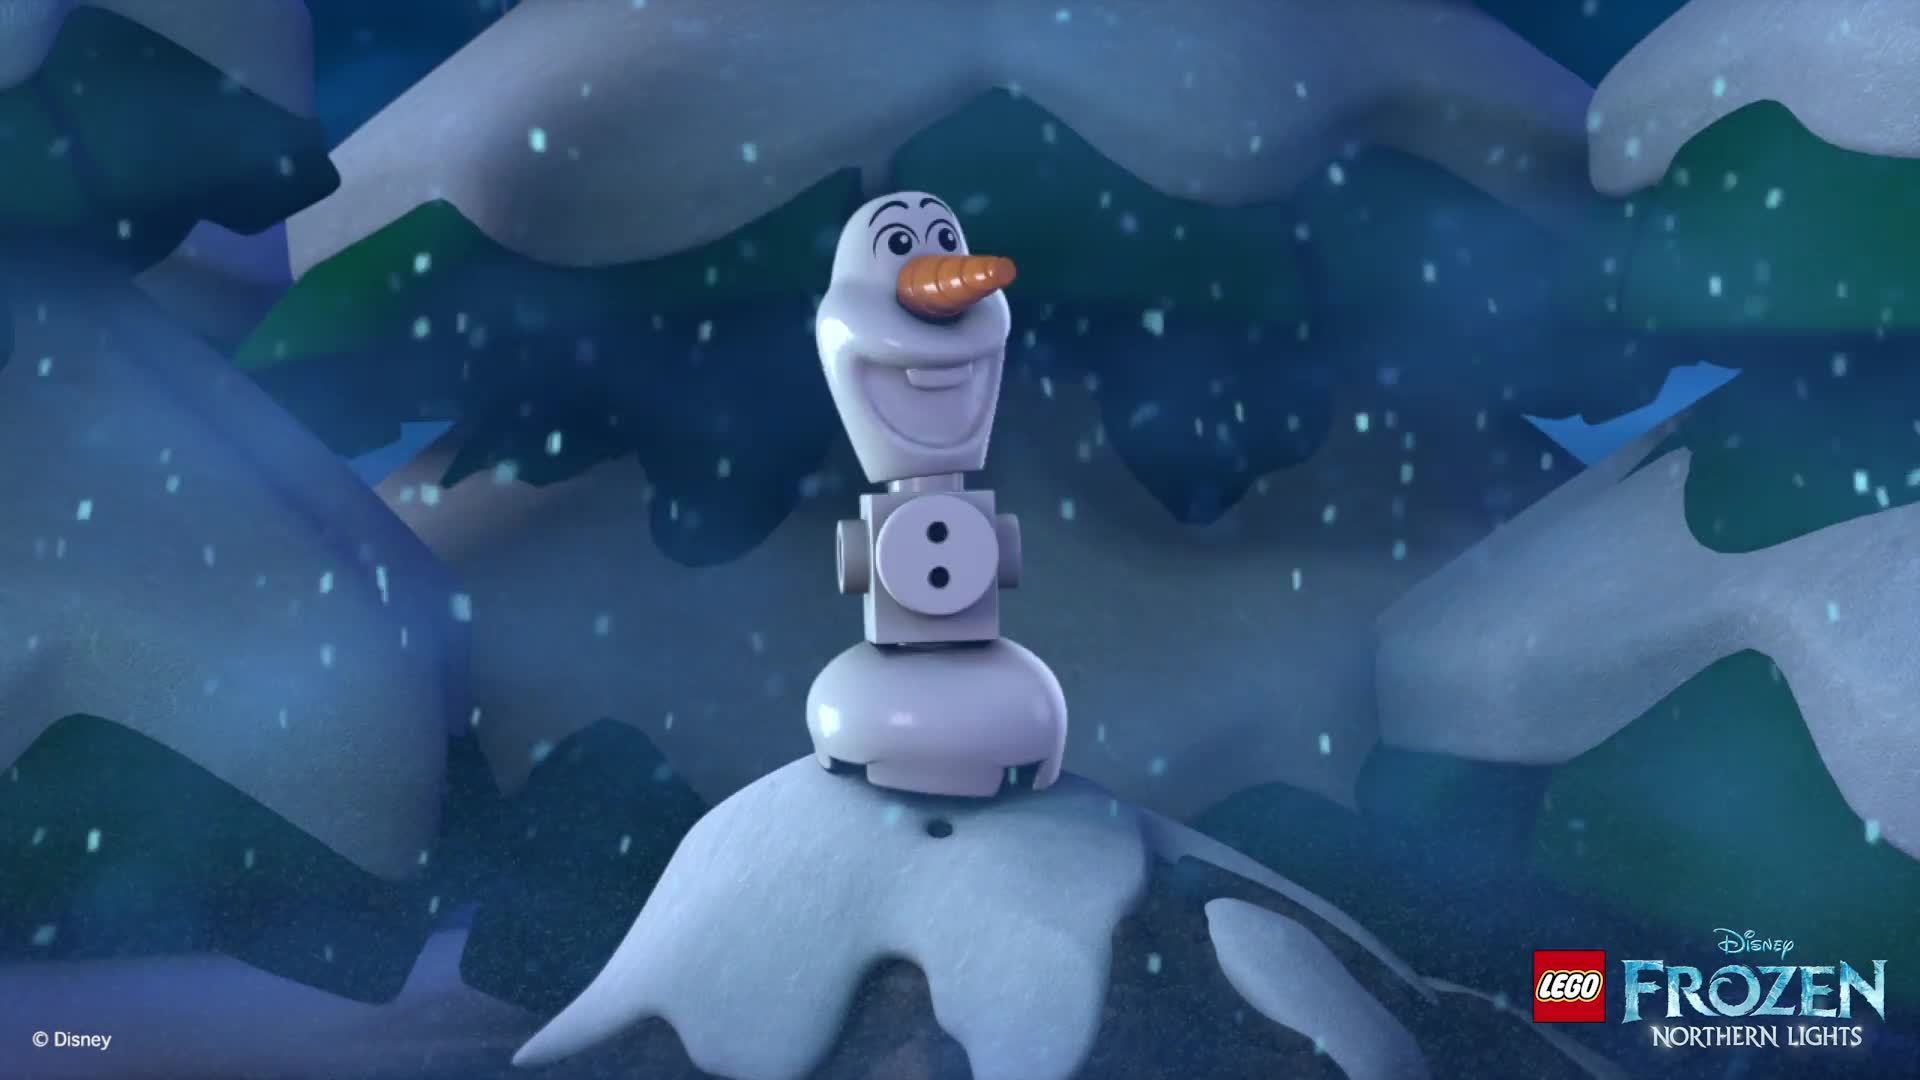 LEGO Disney Frozen Northern Lights – Olaf Armageddon Disney Video